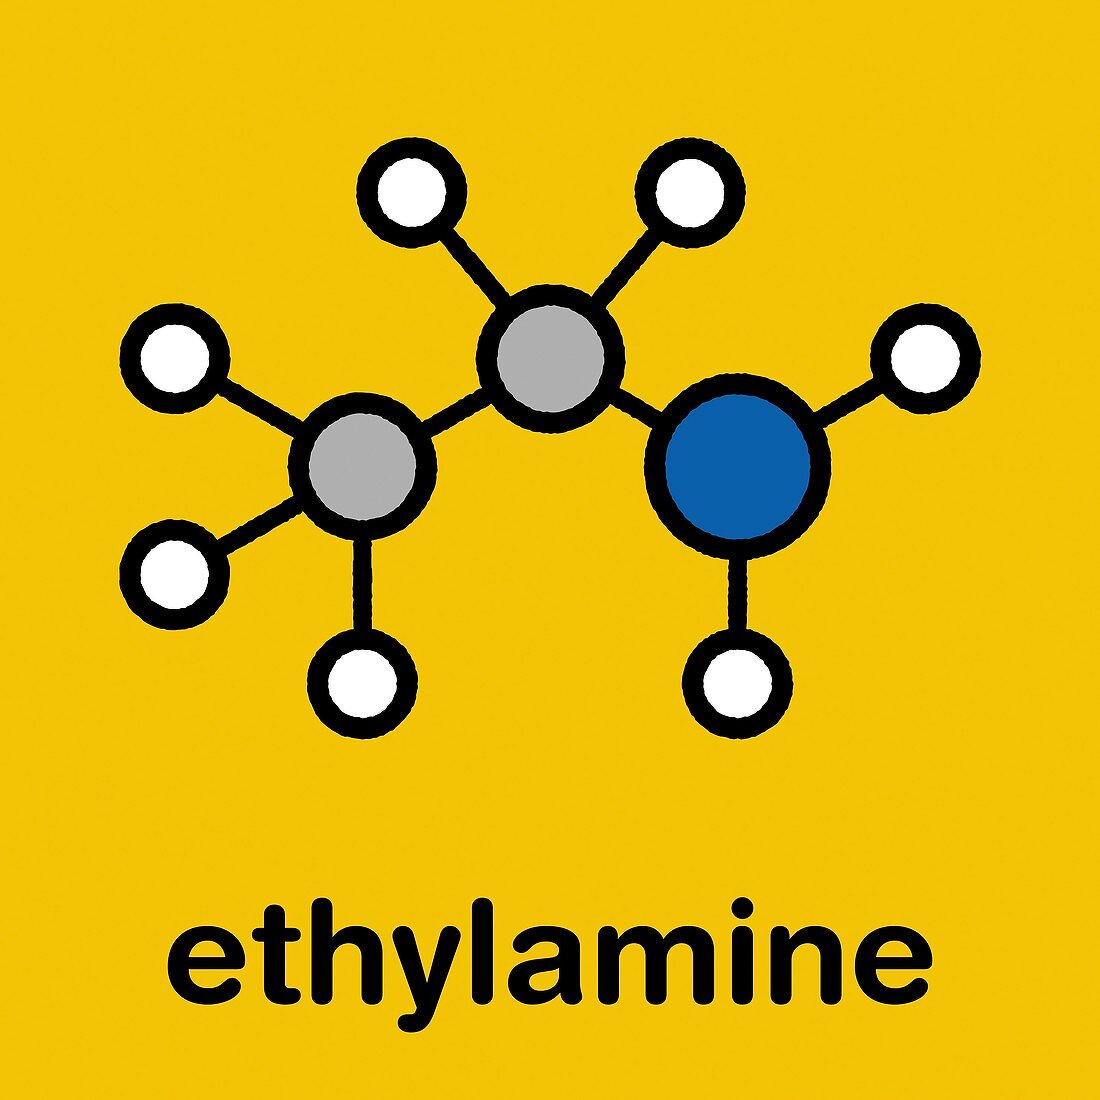 Ethylamine organic base molecule, illustration